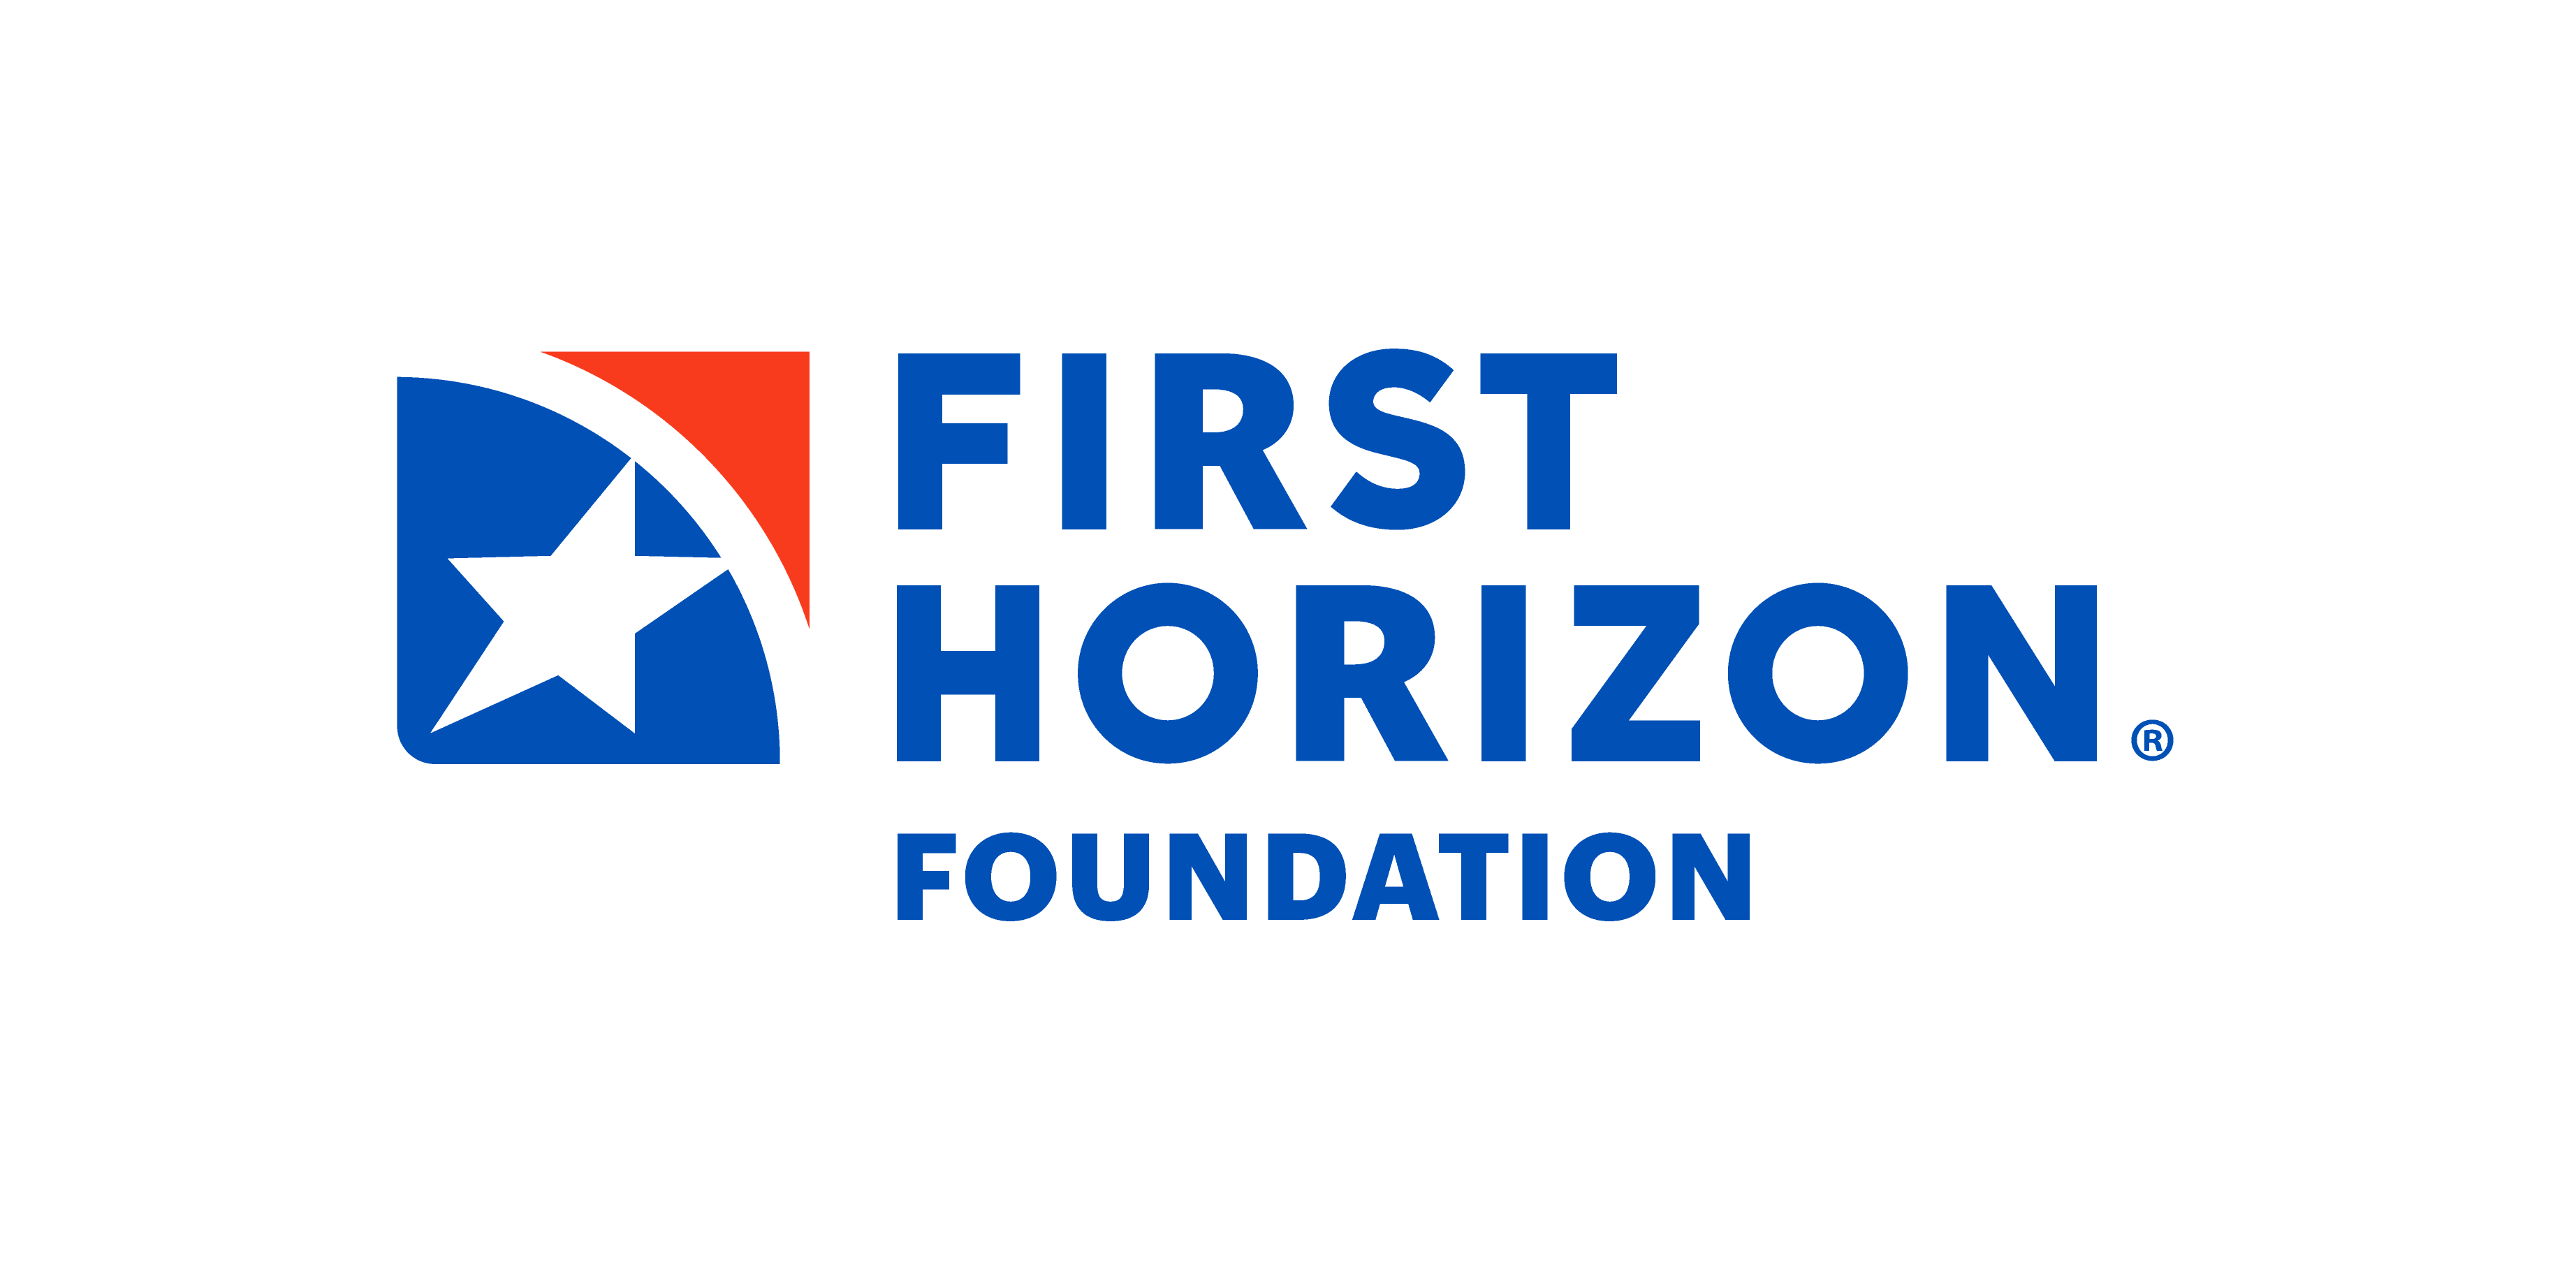 4First Horizon Foundation 